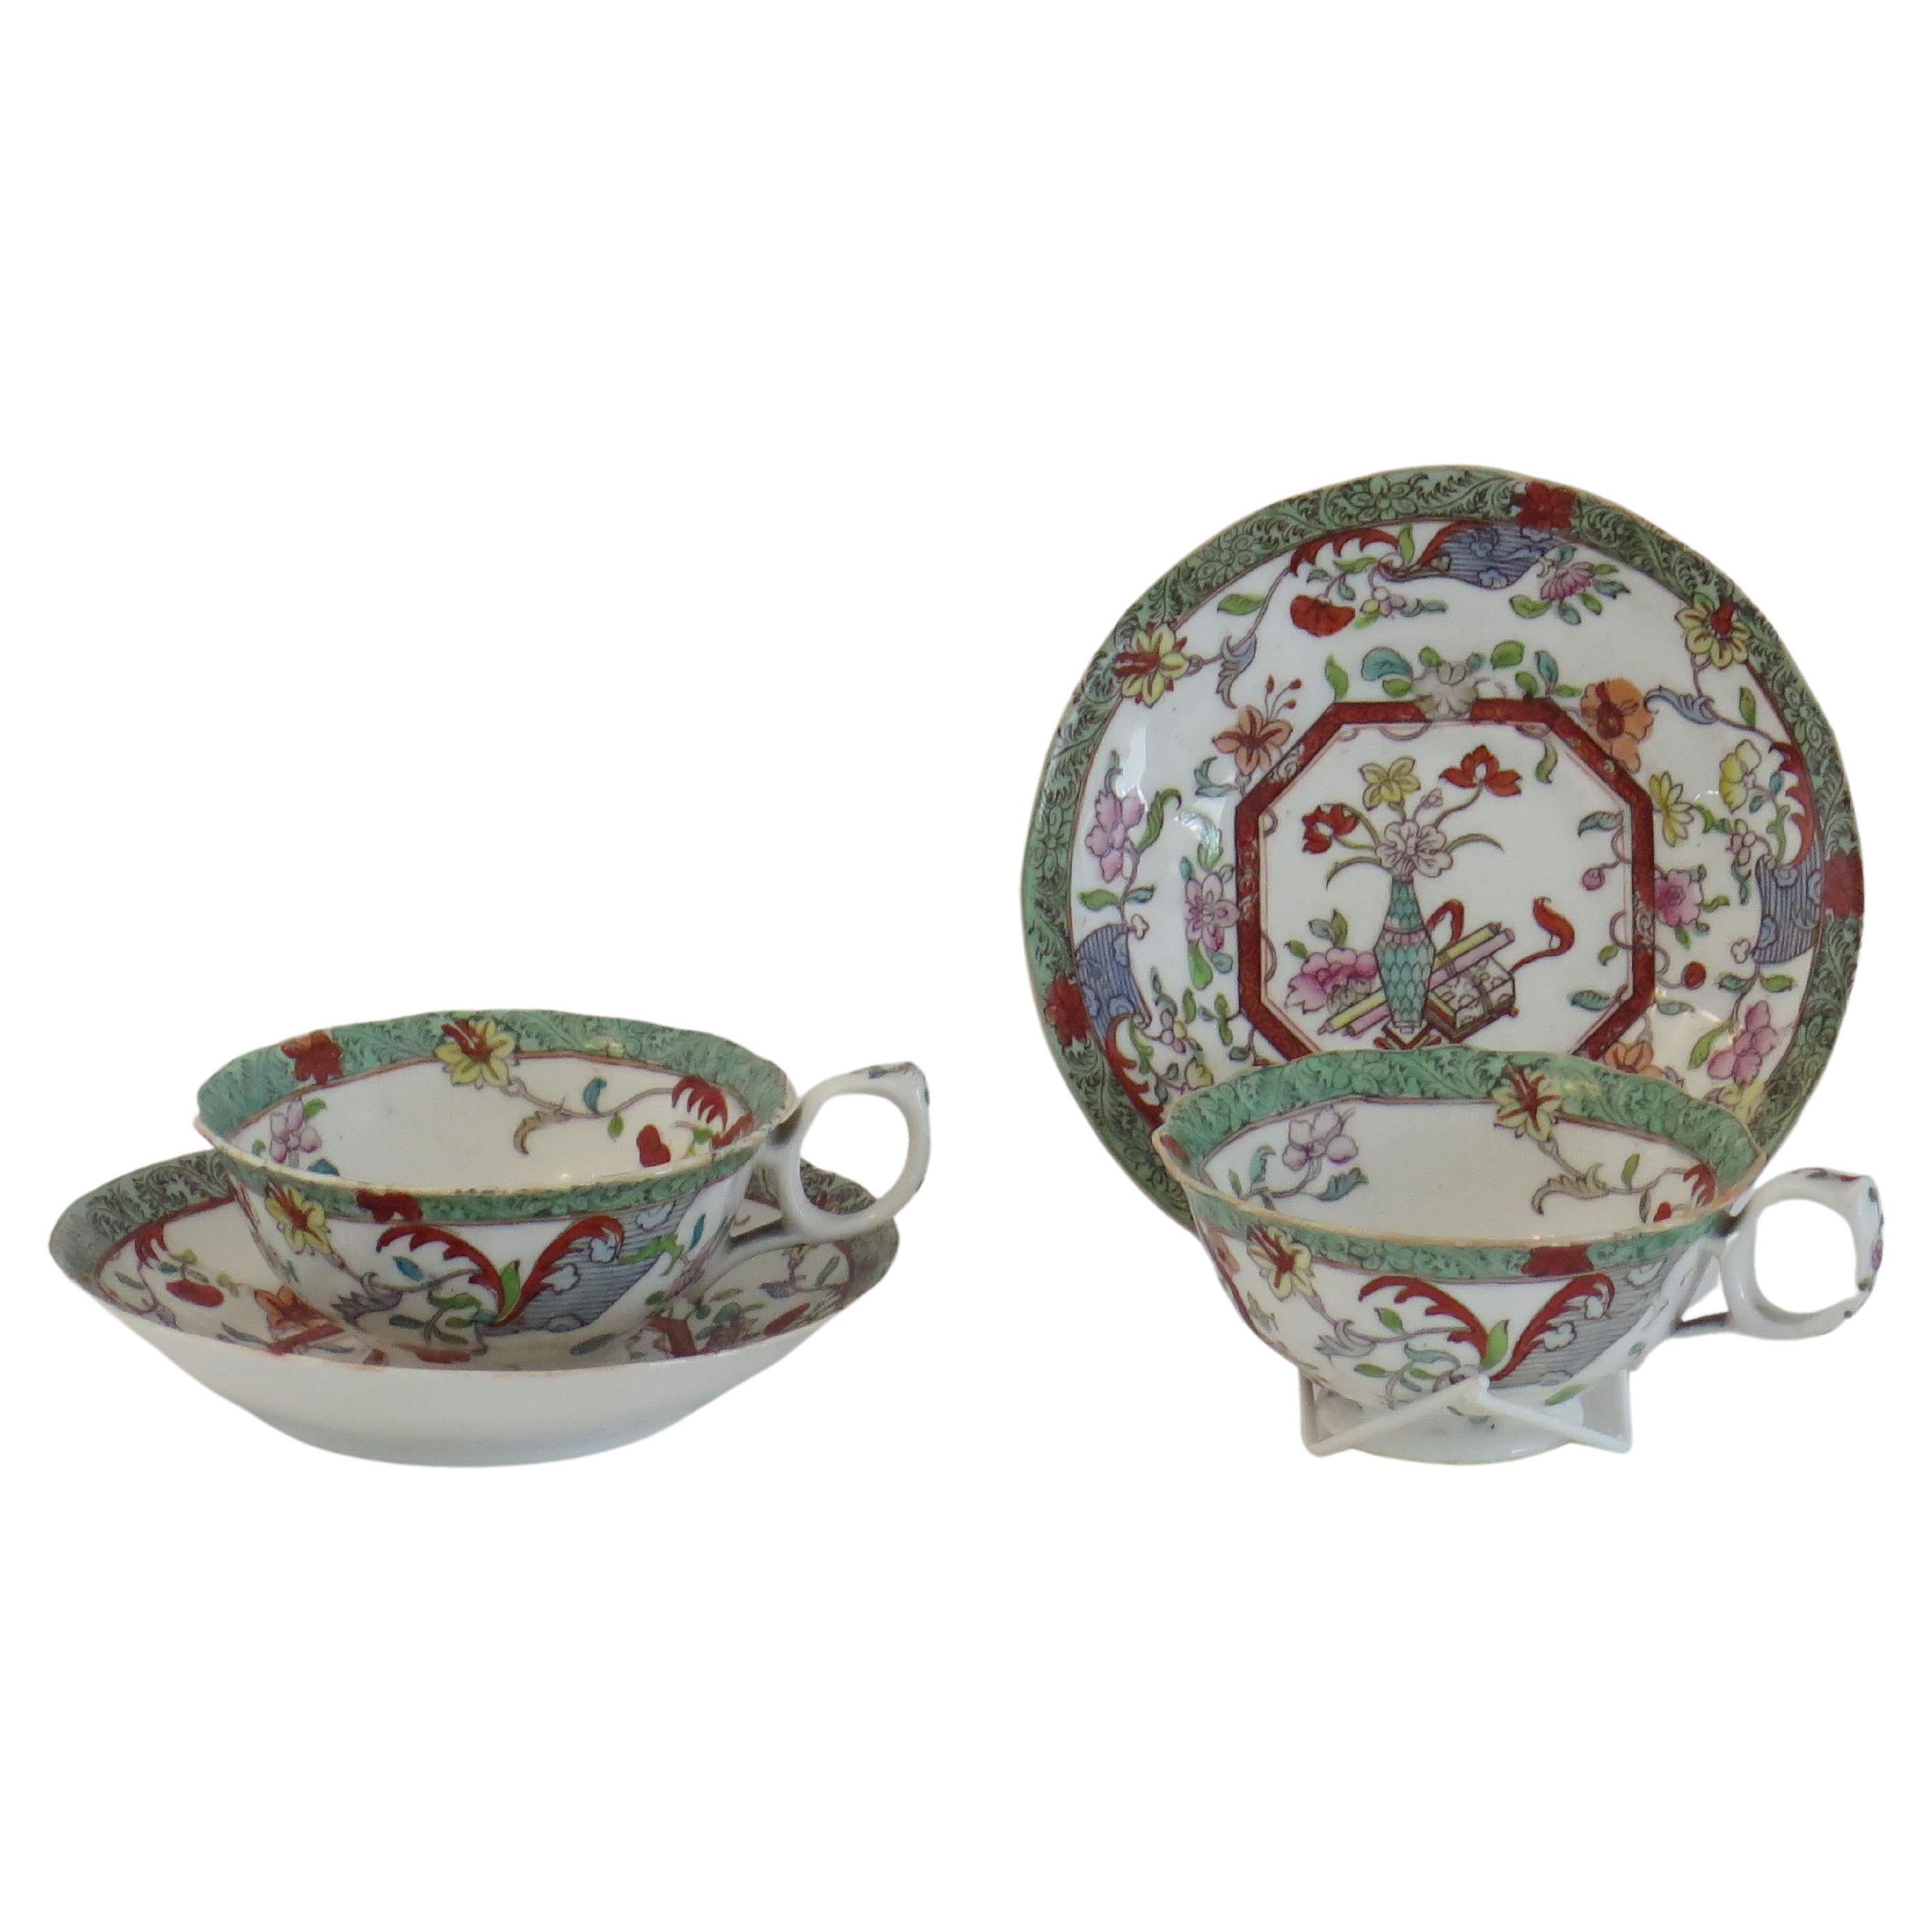 William IV PAR-(B) de tazas y platillos de porcelana de C J Mason Ptn 223, ca 1830